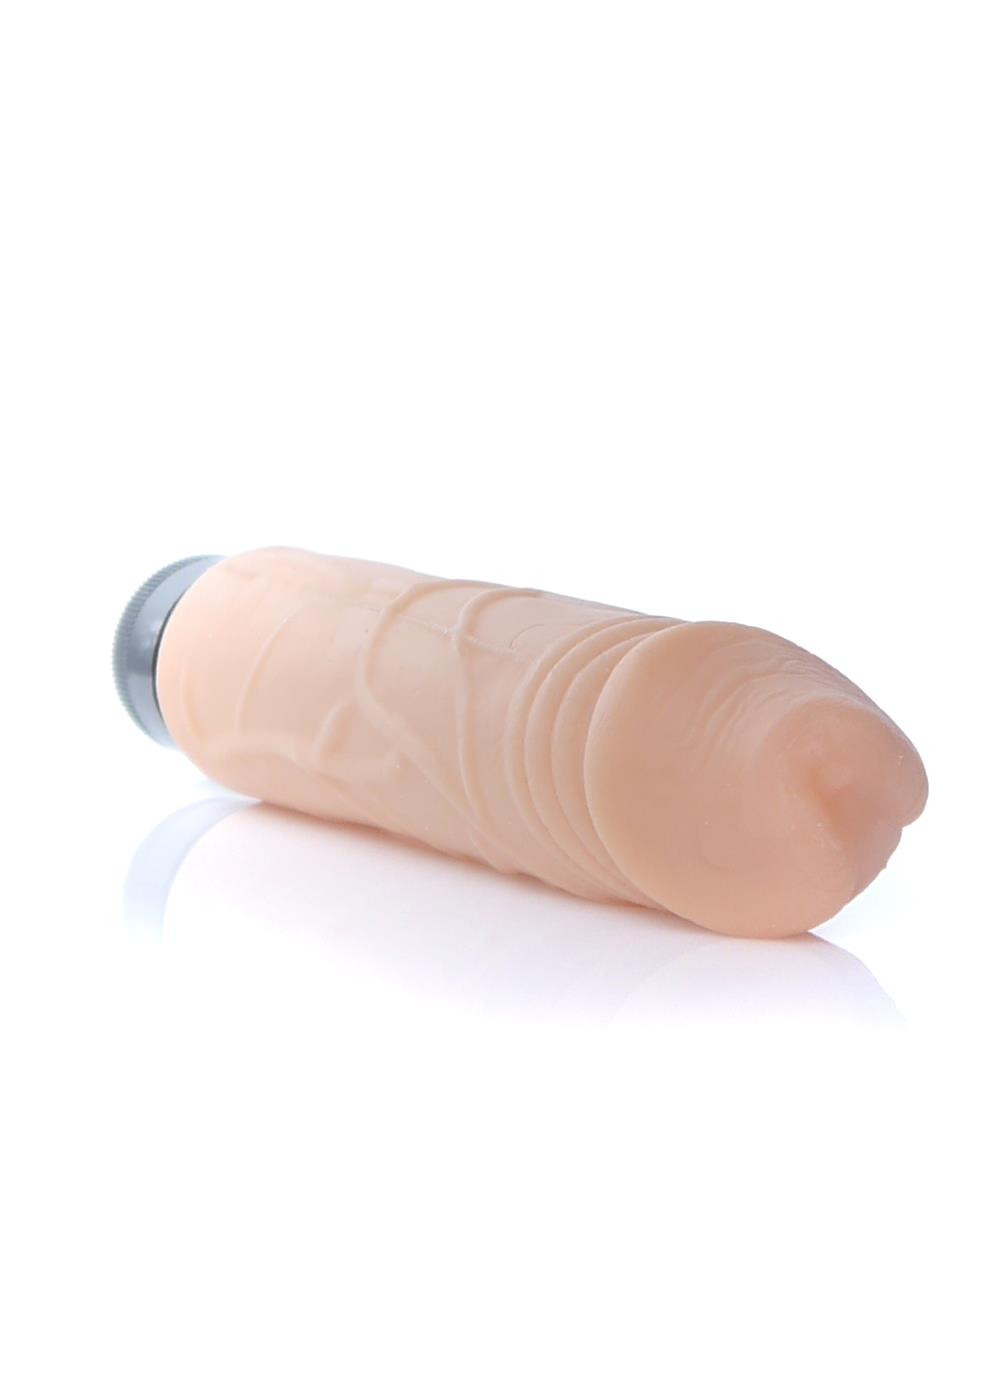 Bossoftoys - 67-00066 - Real Skin - Realistic vibrator - Flesh - 22 m- Dia 4 cm - Multispeed6